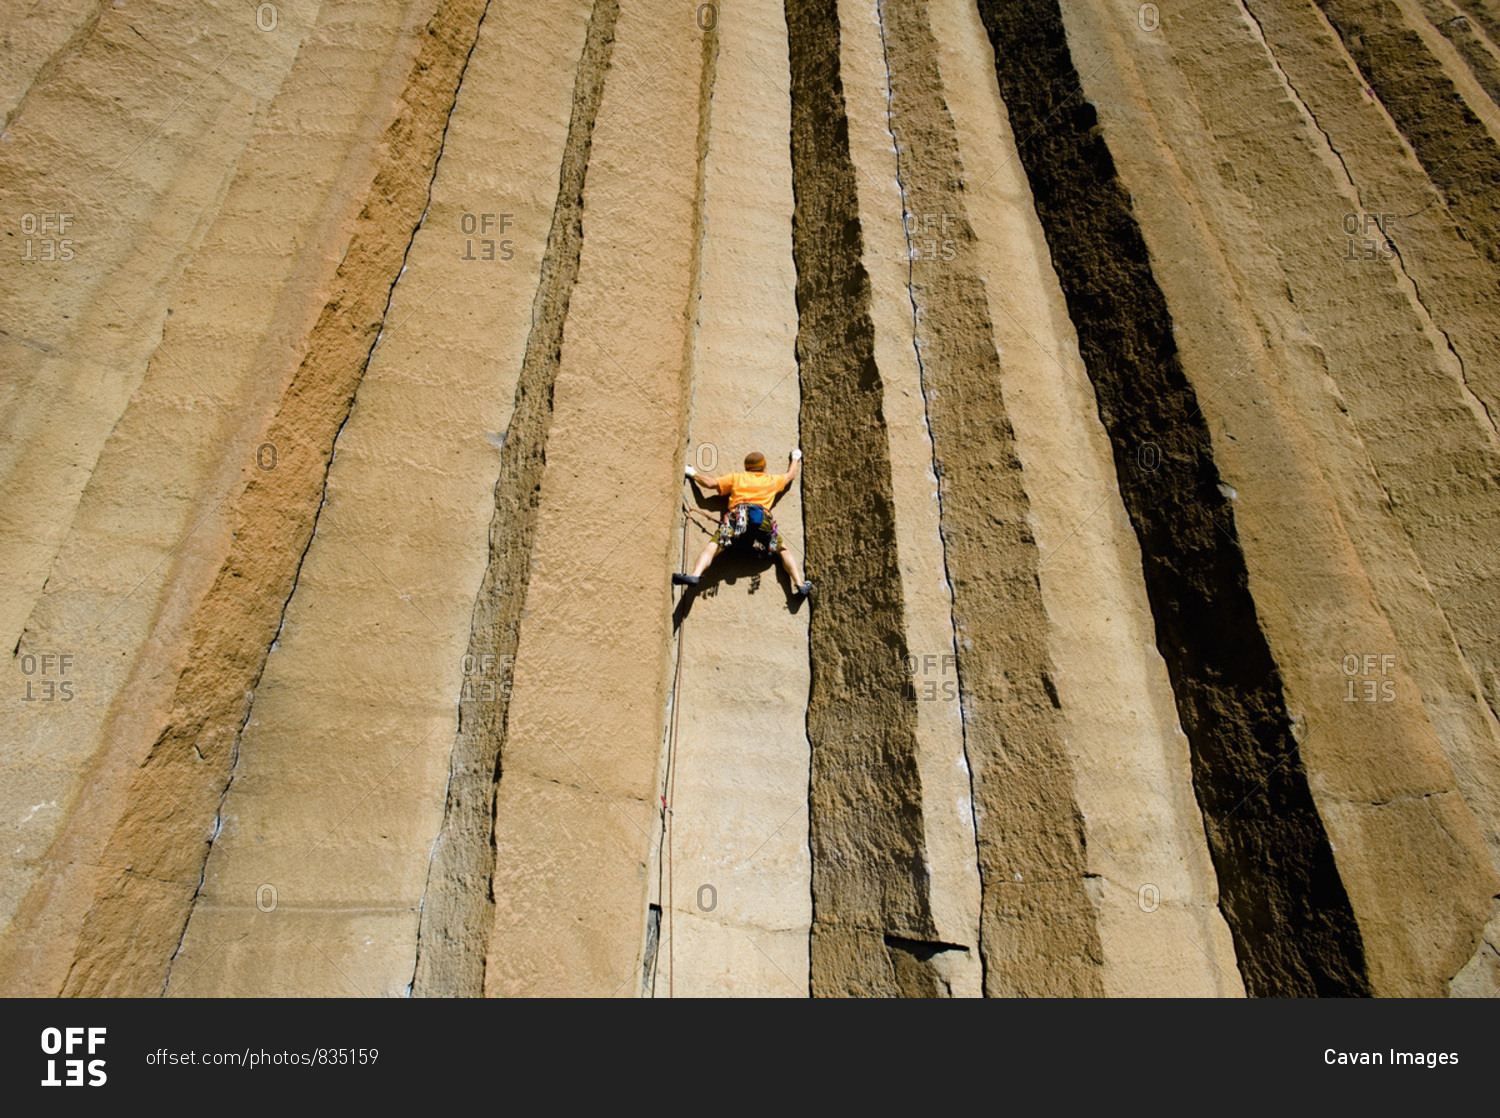 A mid adult man rock climbing at Trout Creek, Oregon.